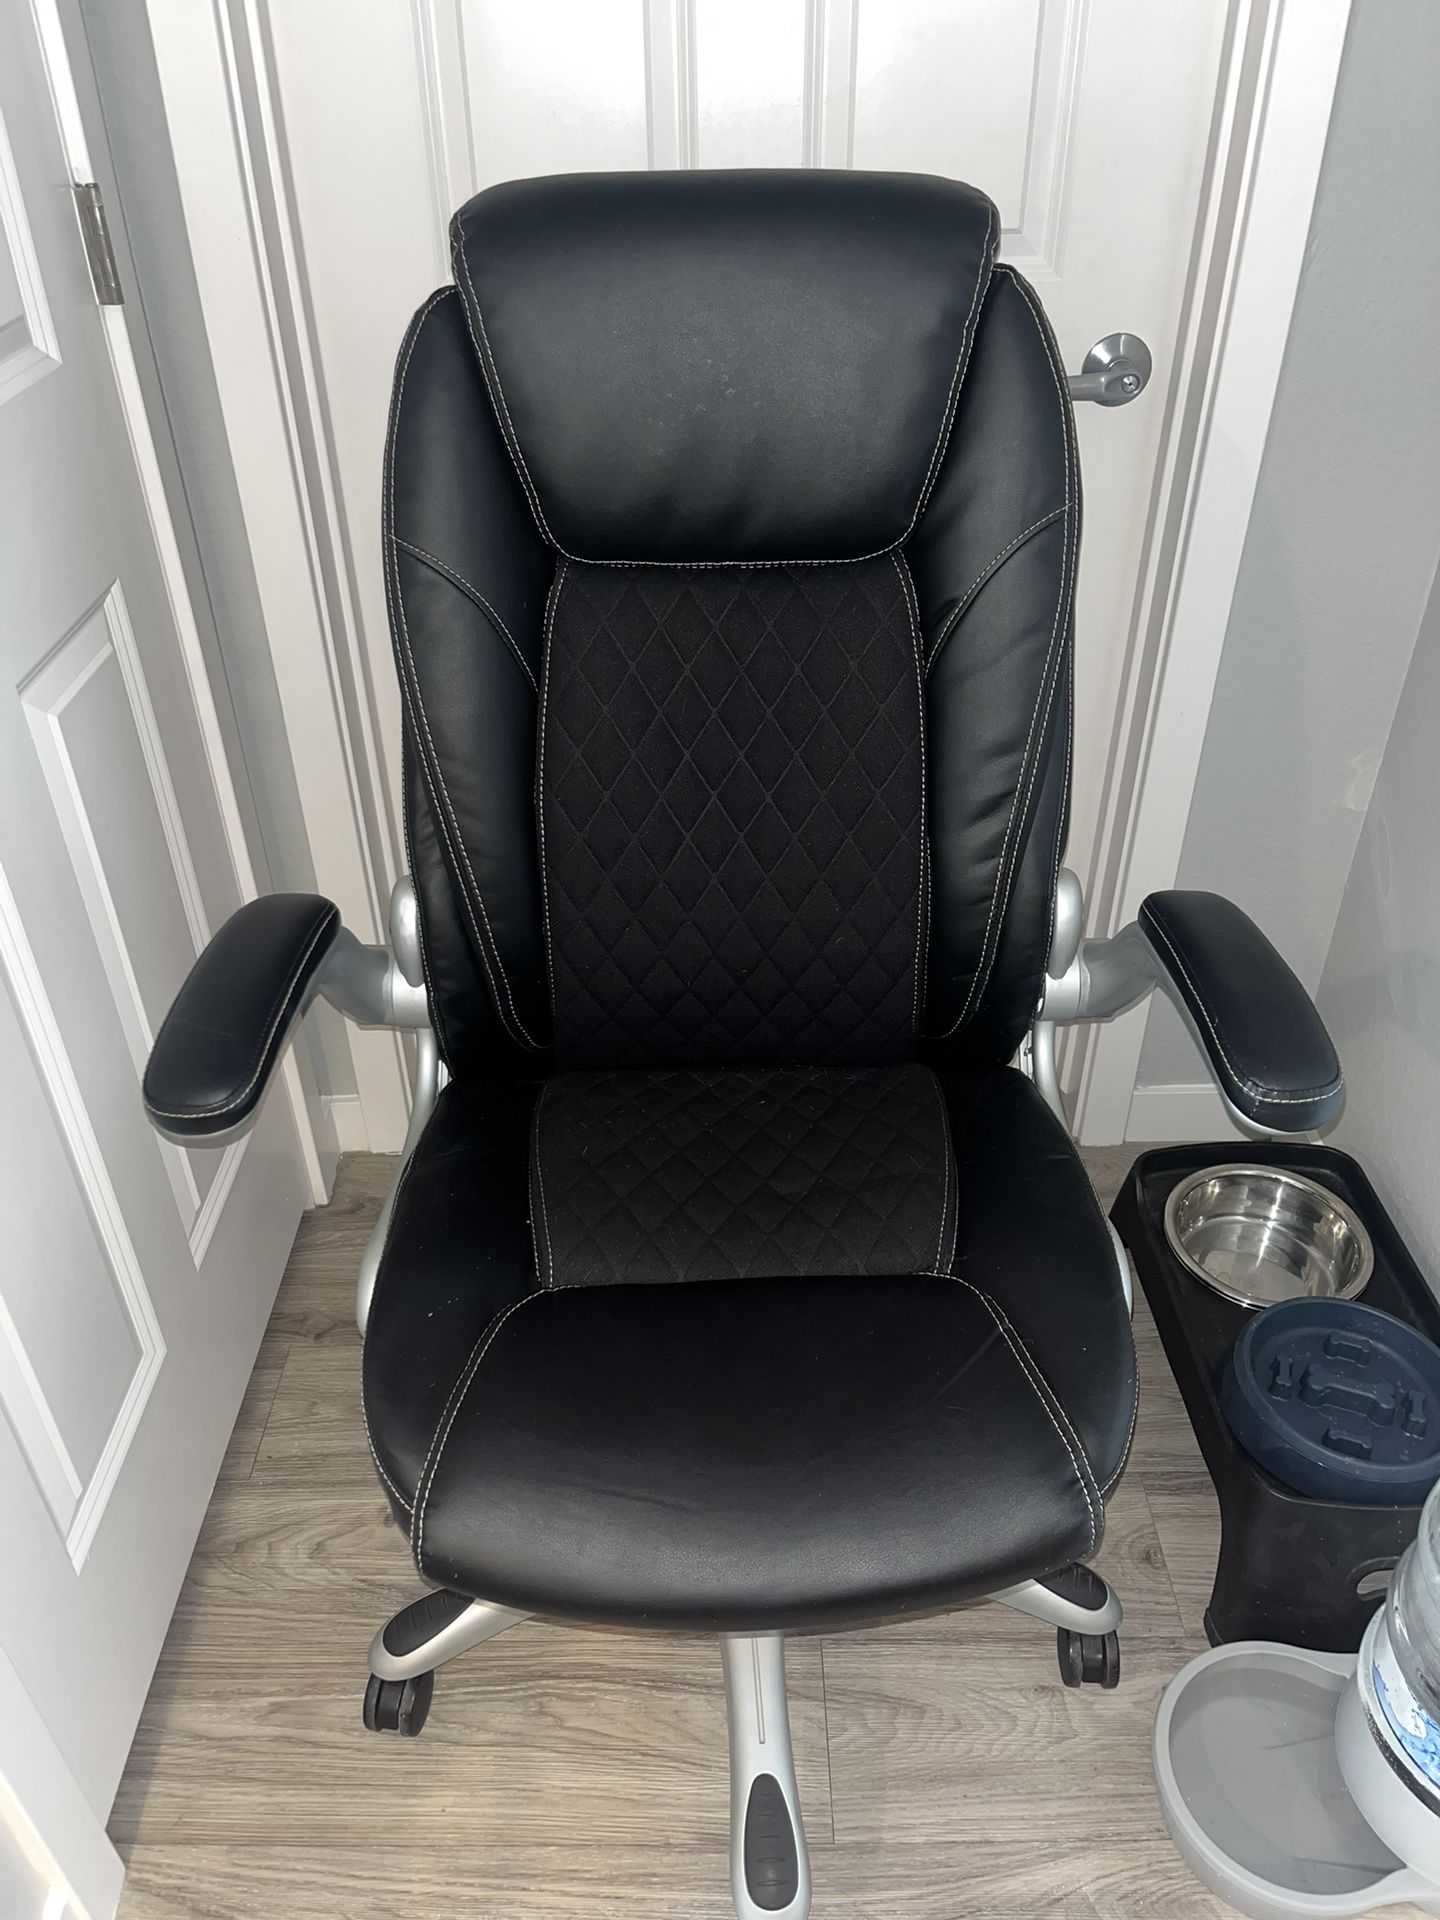 Office/desk chair 